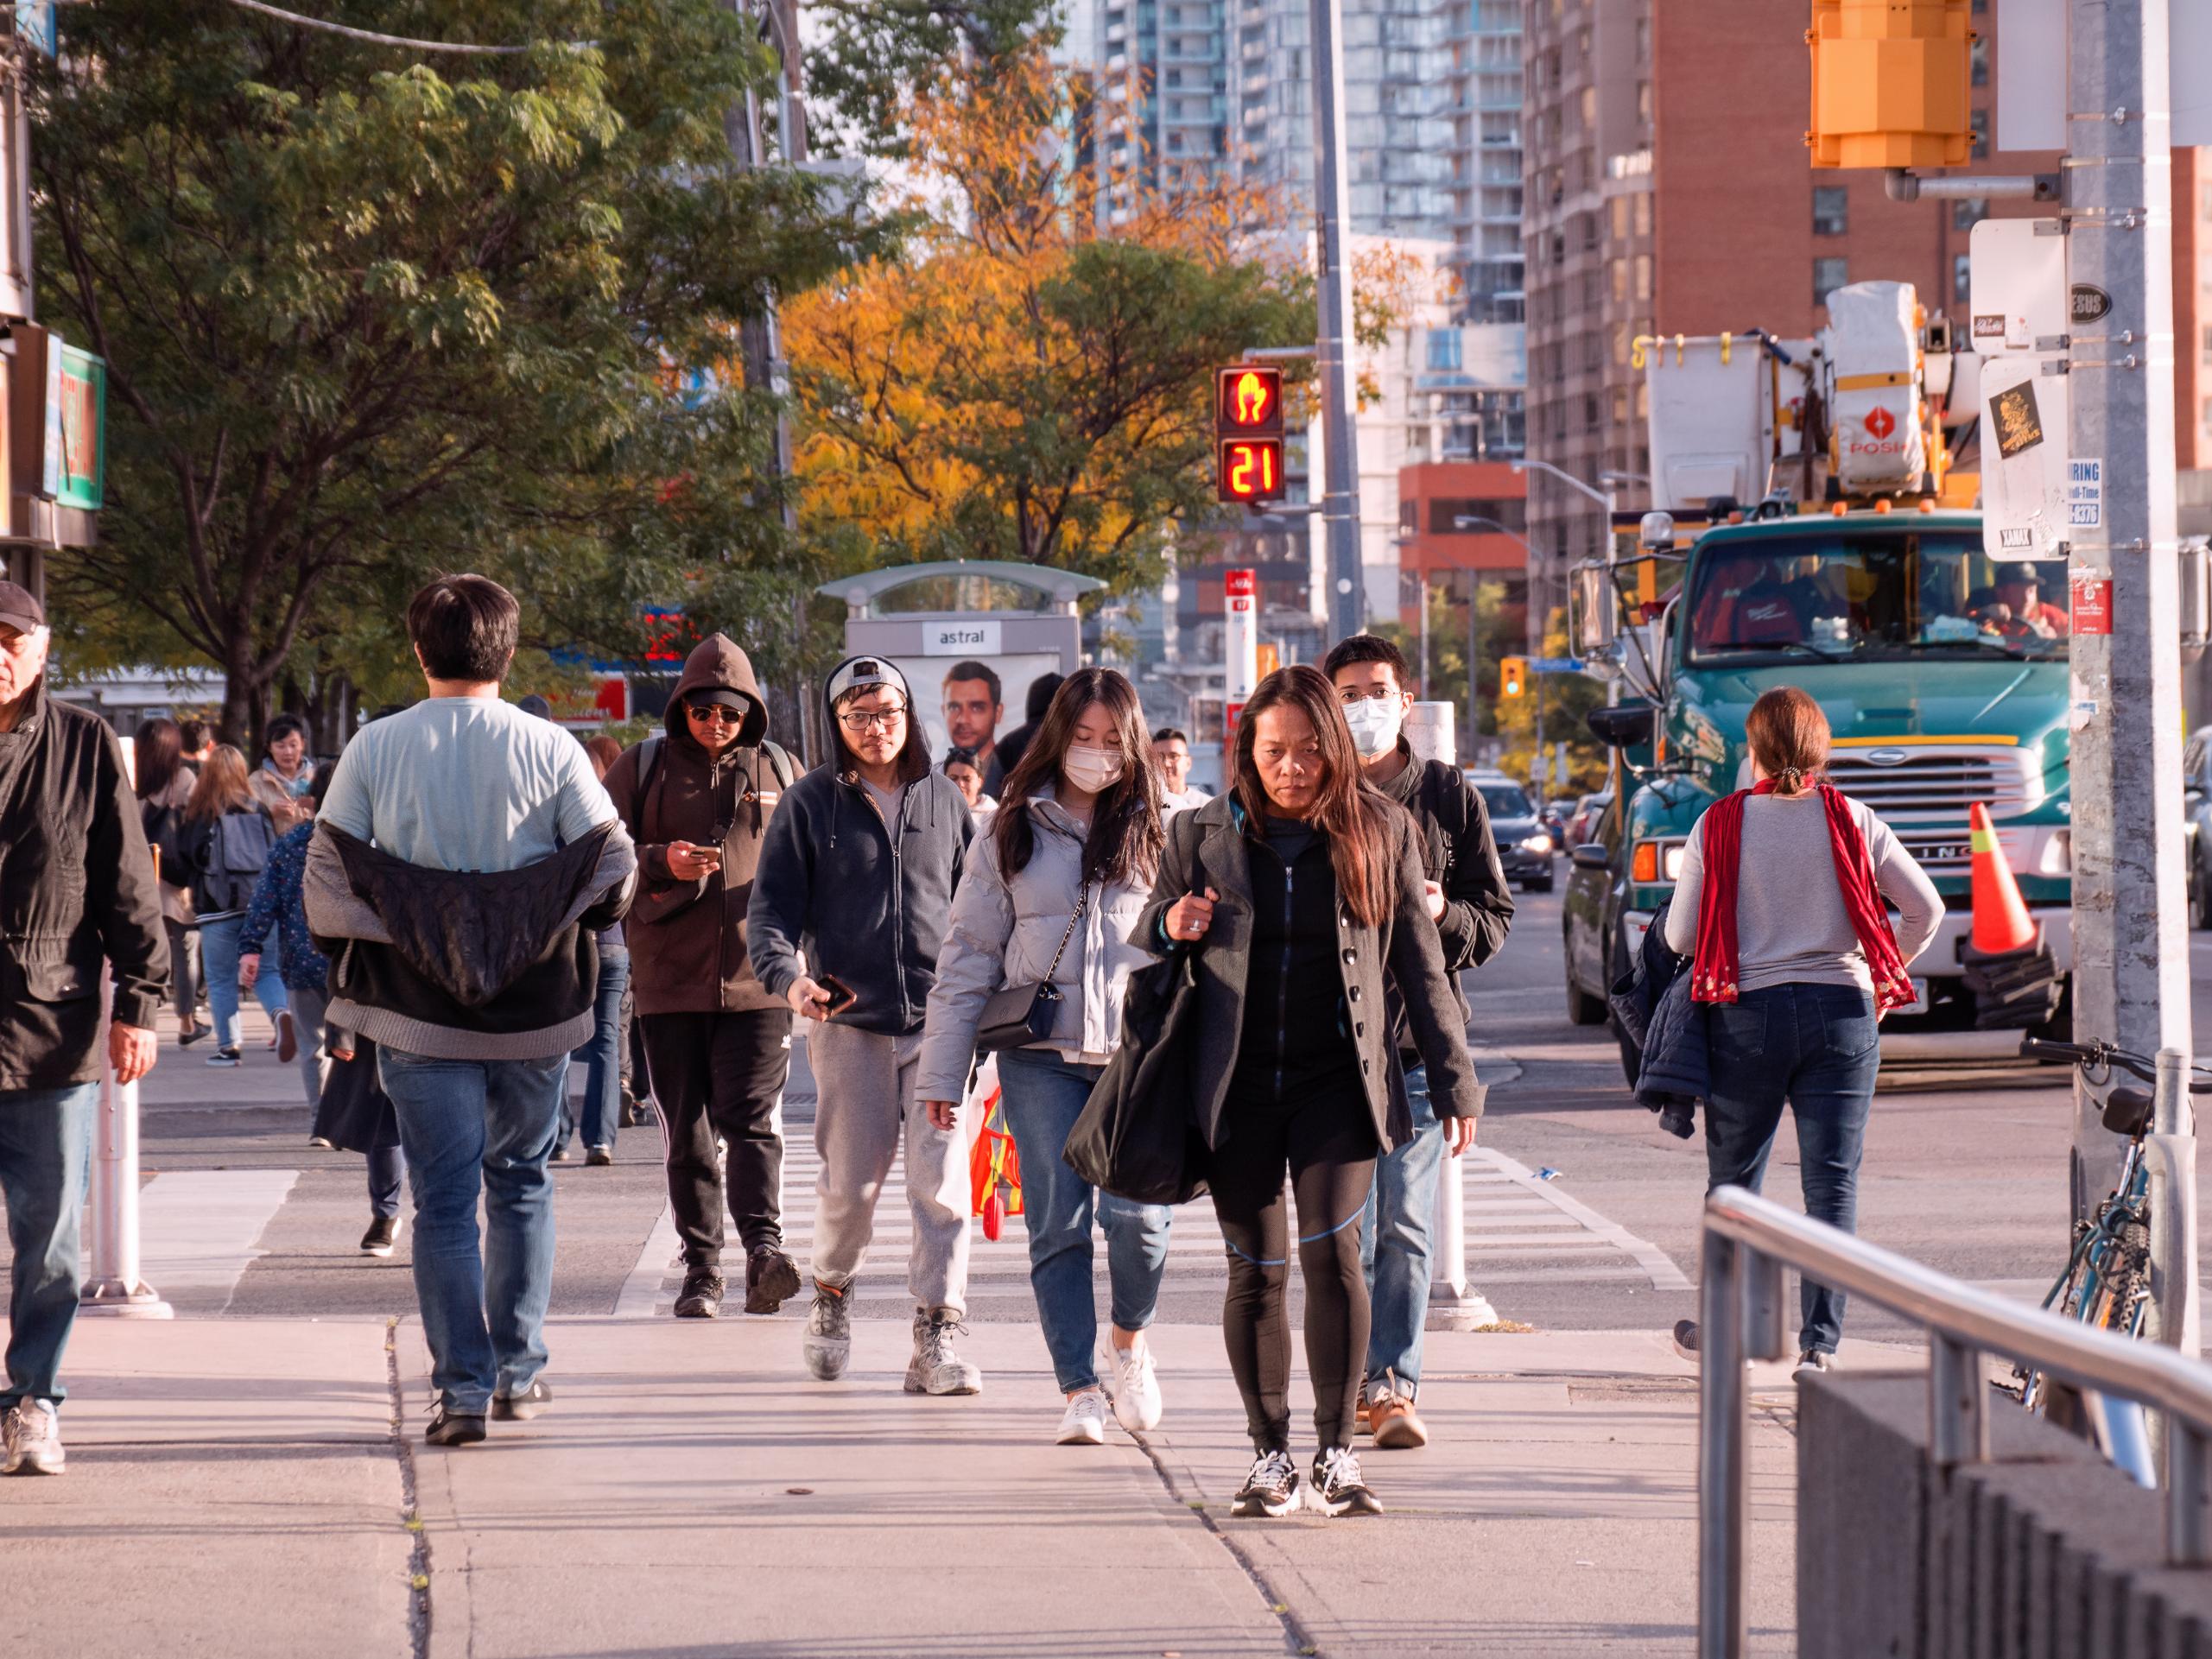 A crowd walks on a Toronto street, early evening, fall 2022